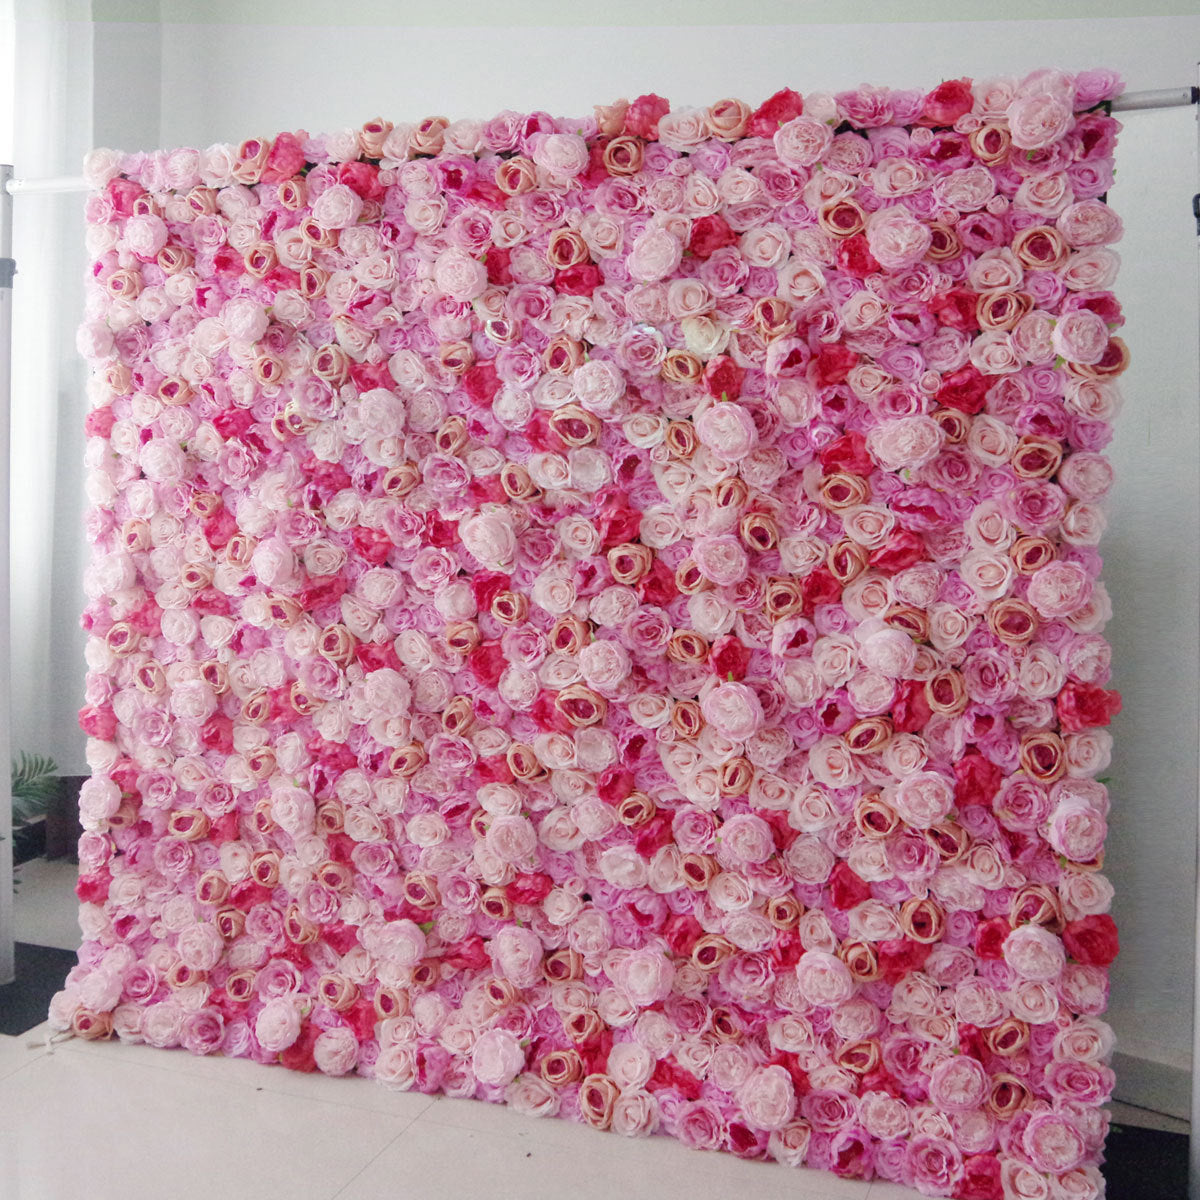 3D Artificial Flower Wall Arrangement Wedding Party Birthday Backdrop Decor HQ1151